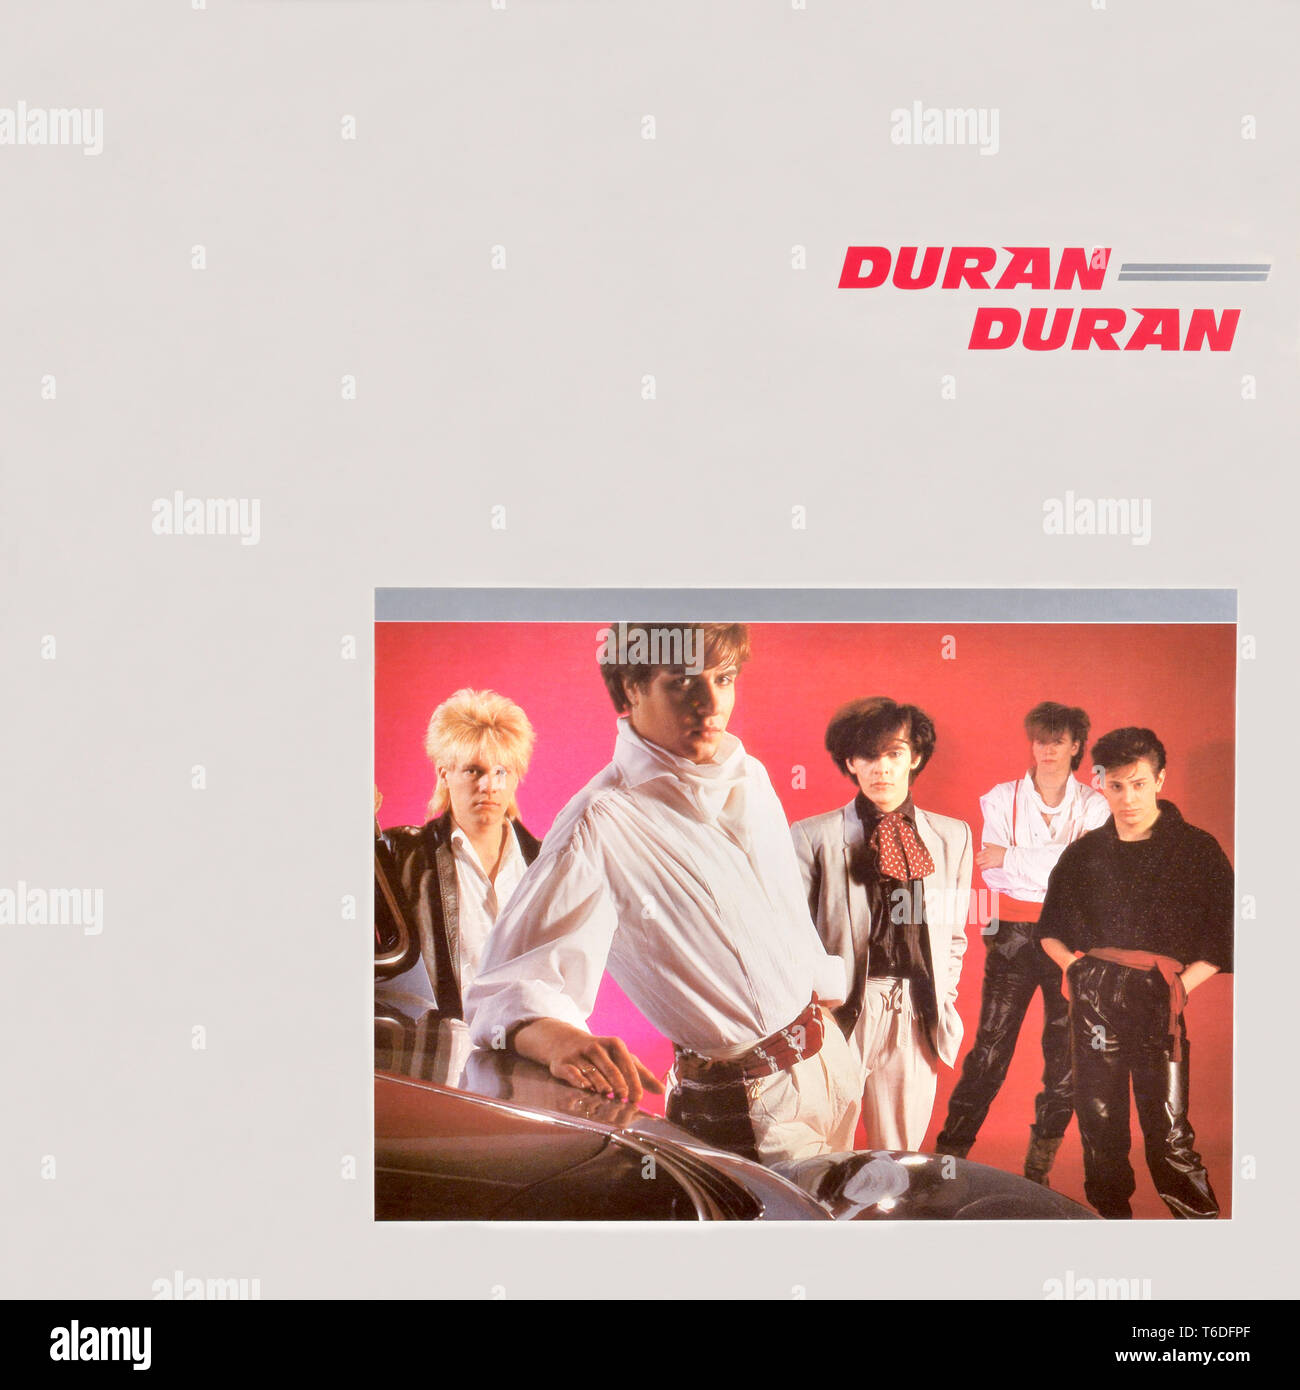 DURAN Duran - original Vinyl Album Cover - Duran Duran - 1981 Stockfoto